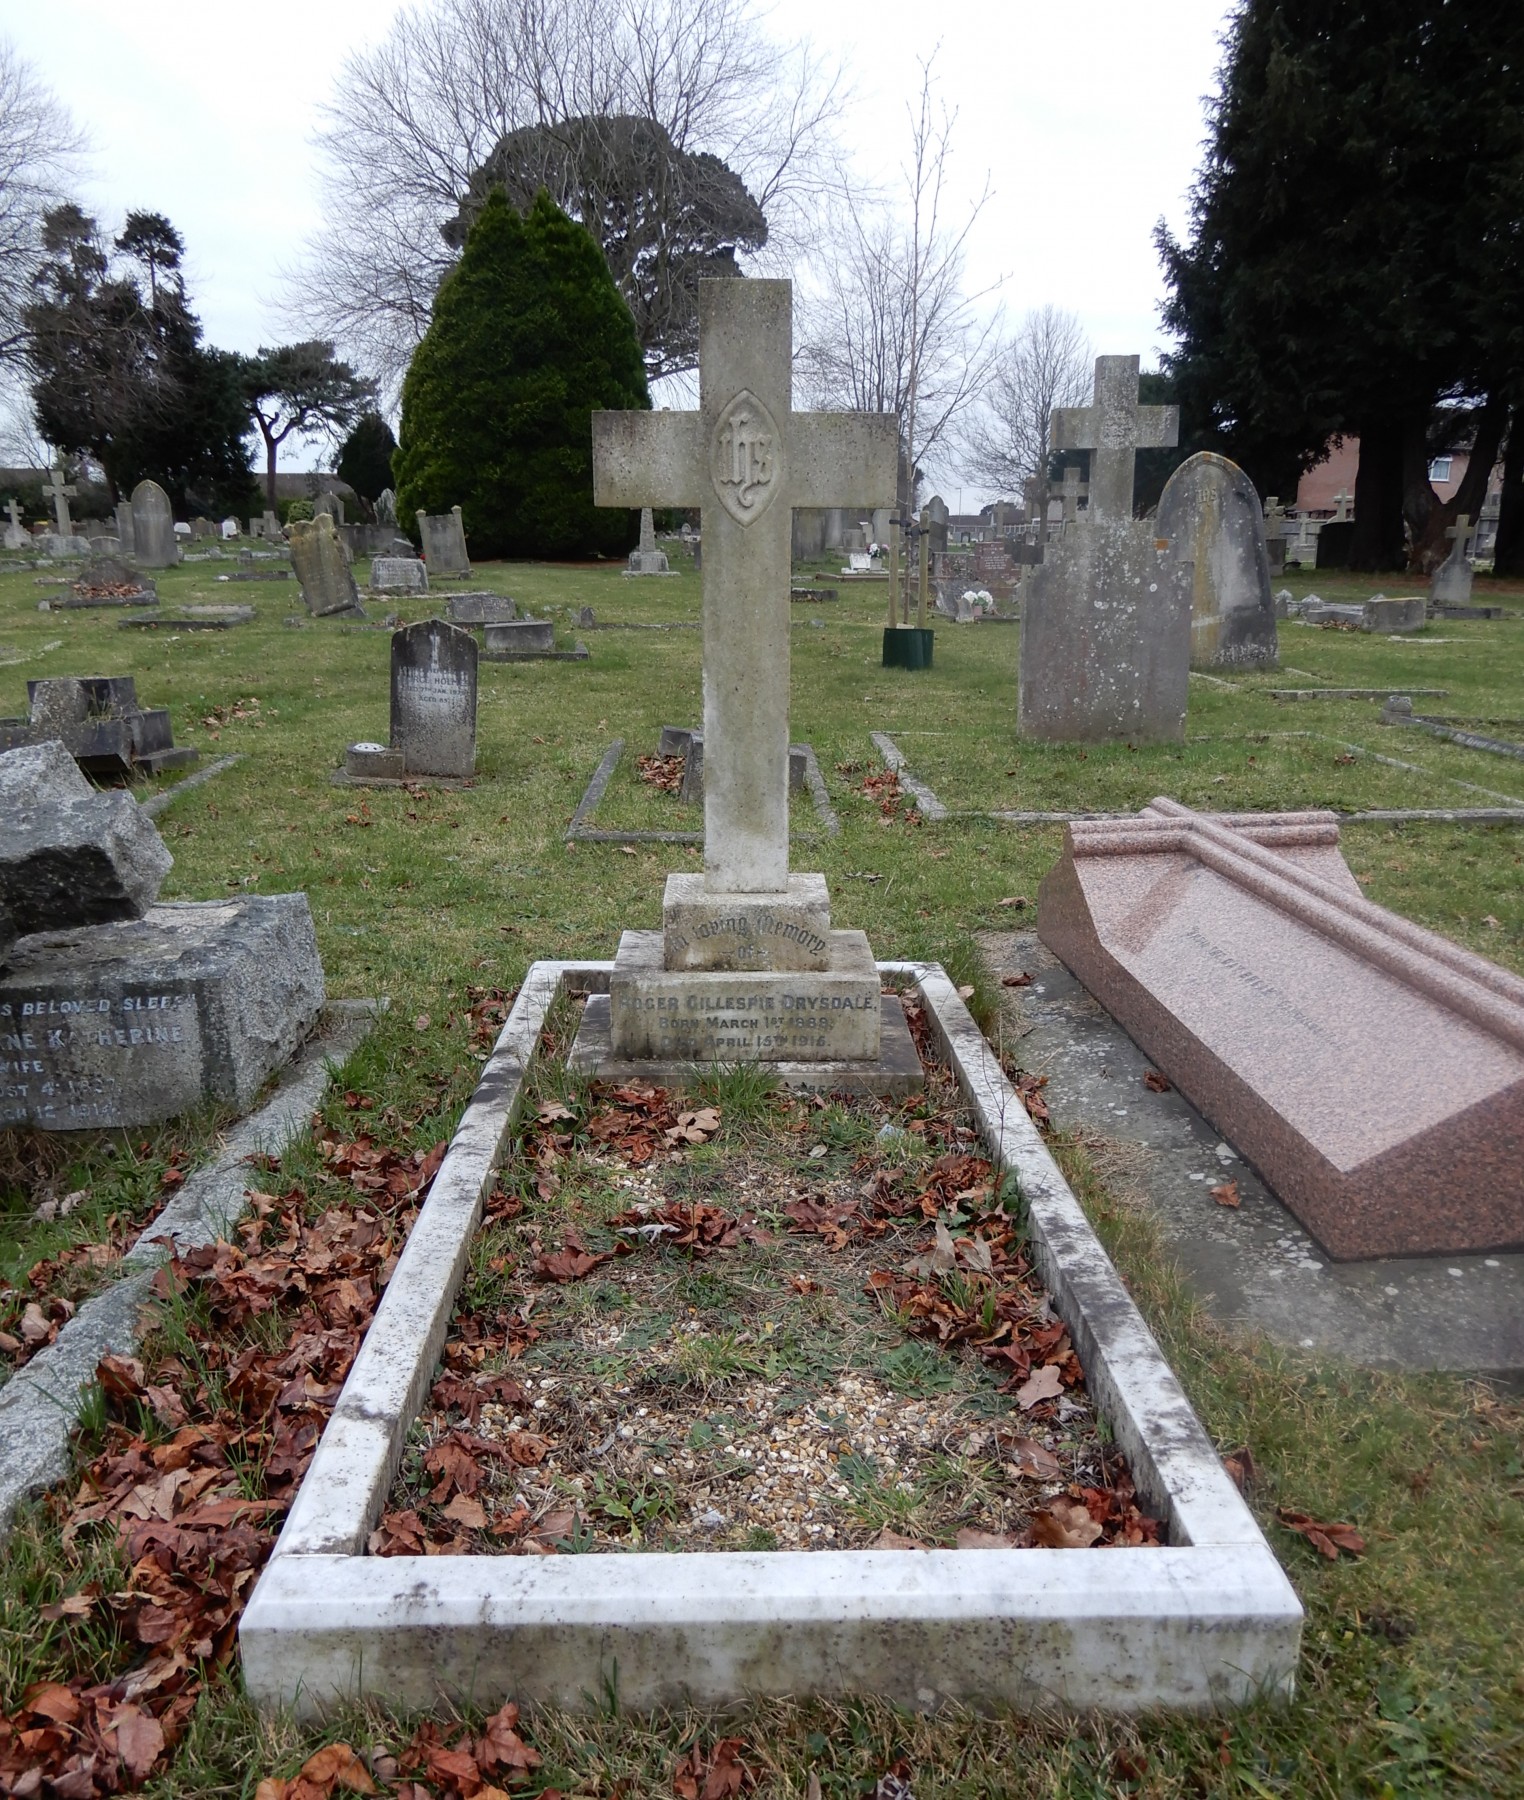 Grave of Roger Drysdale, Lymington Cemetery